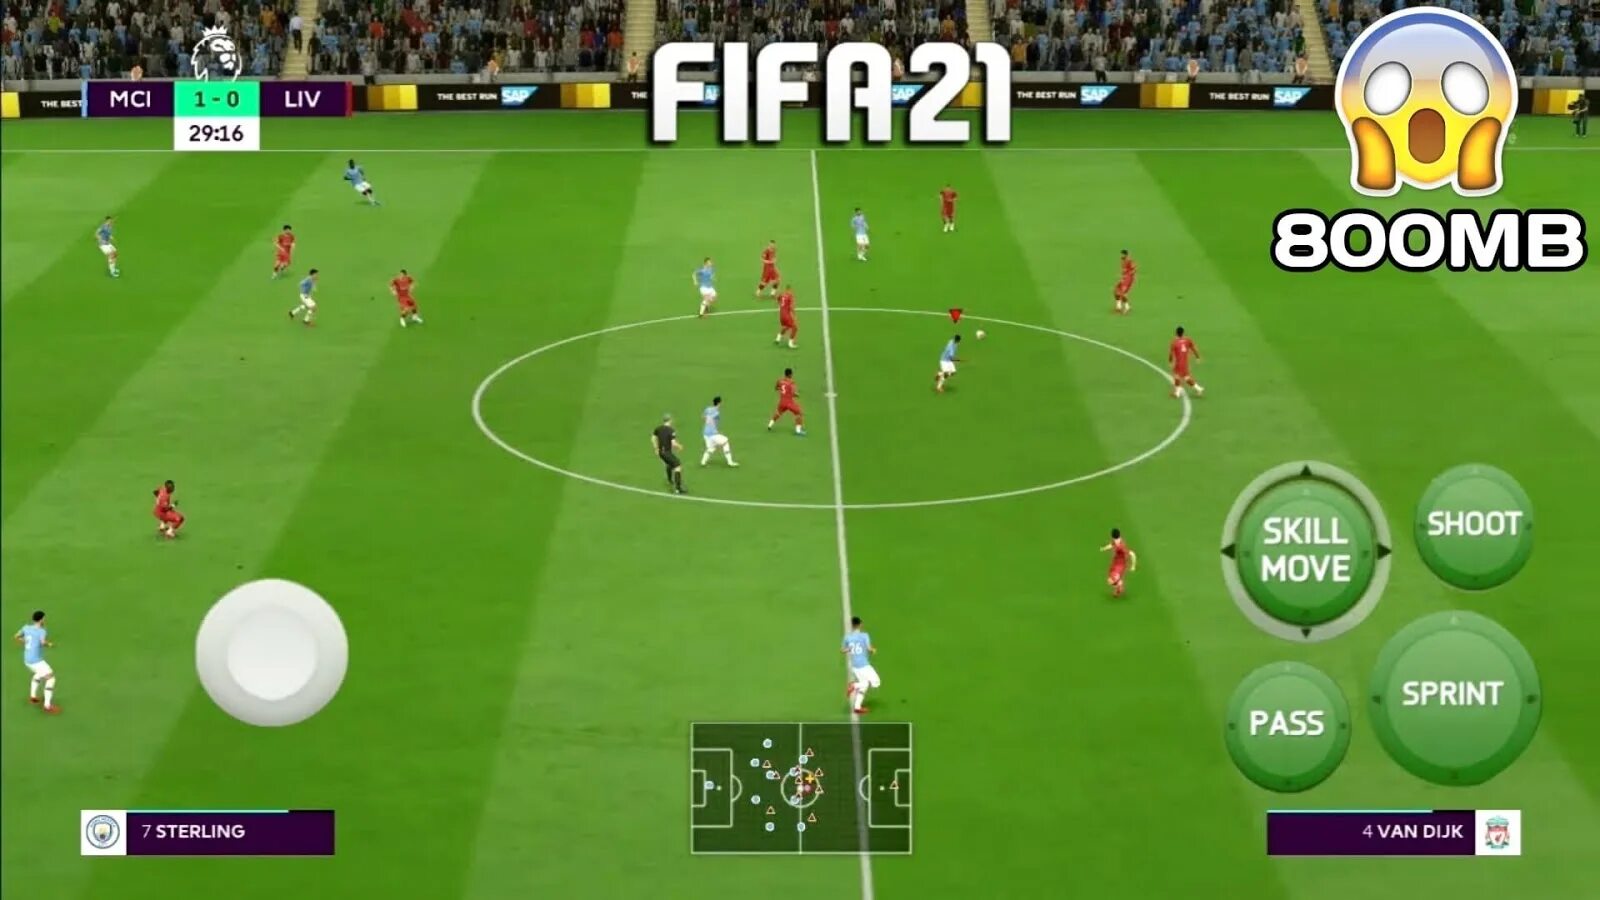 Fifa apk obb. ФИФА 14 мод 21 PPSSPP. FIFA 14 Android Mod 21. FIFA 22 Mod Android. FIFA mobile Mod APK.